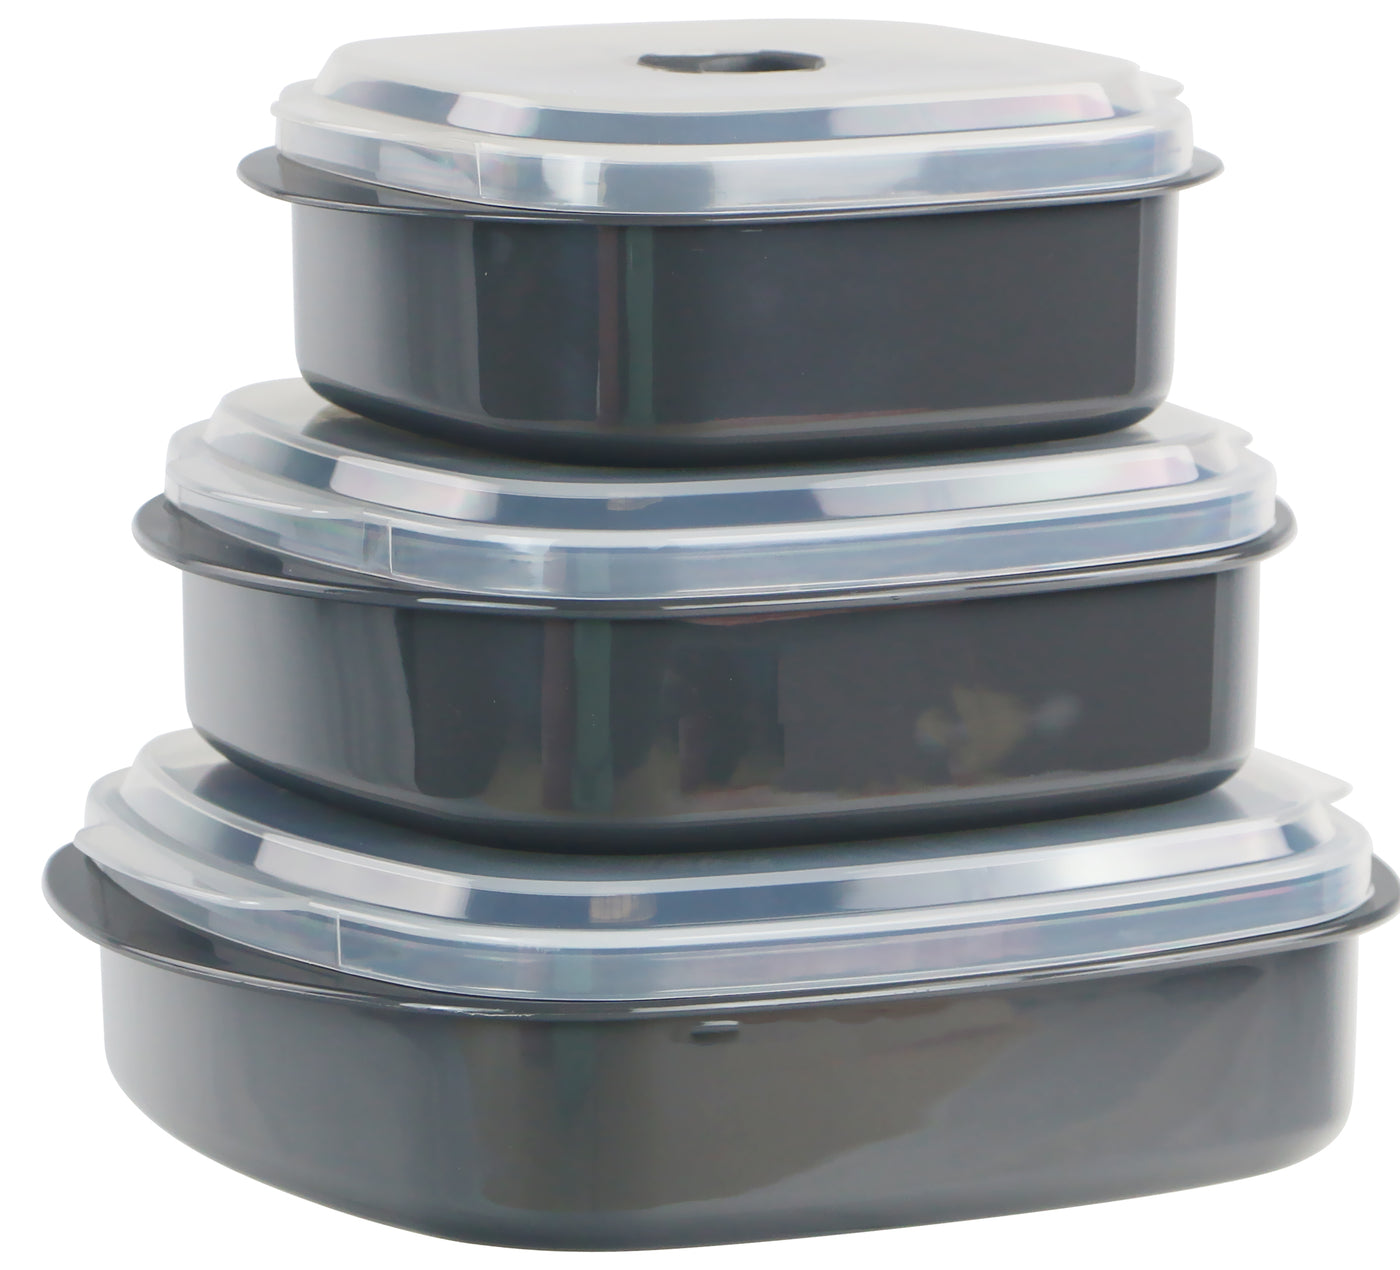 Microwave Cookware/Storage Set - Gray – Reston Lloyd